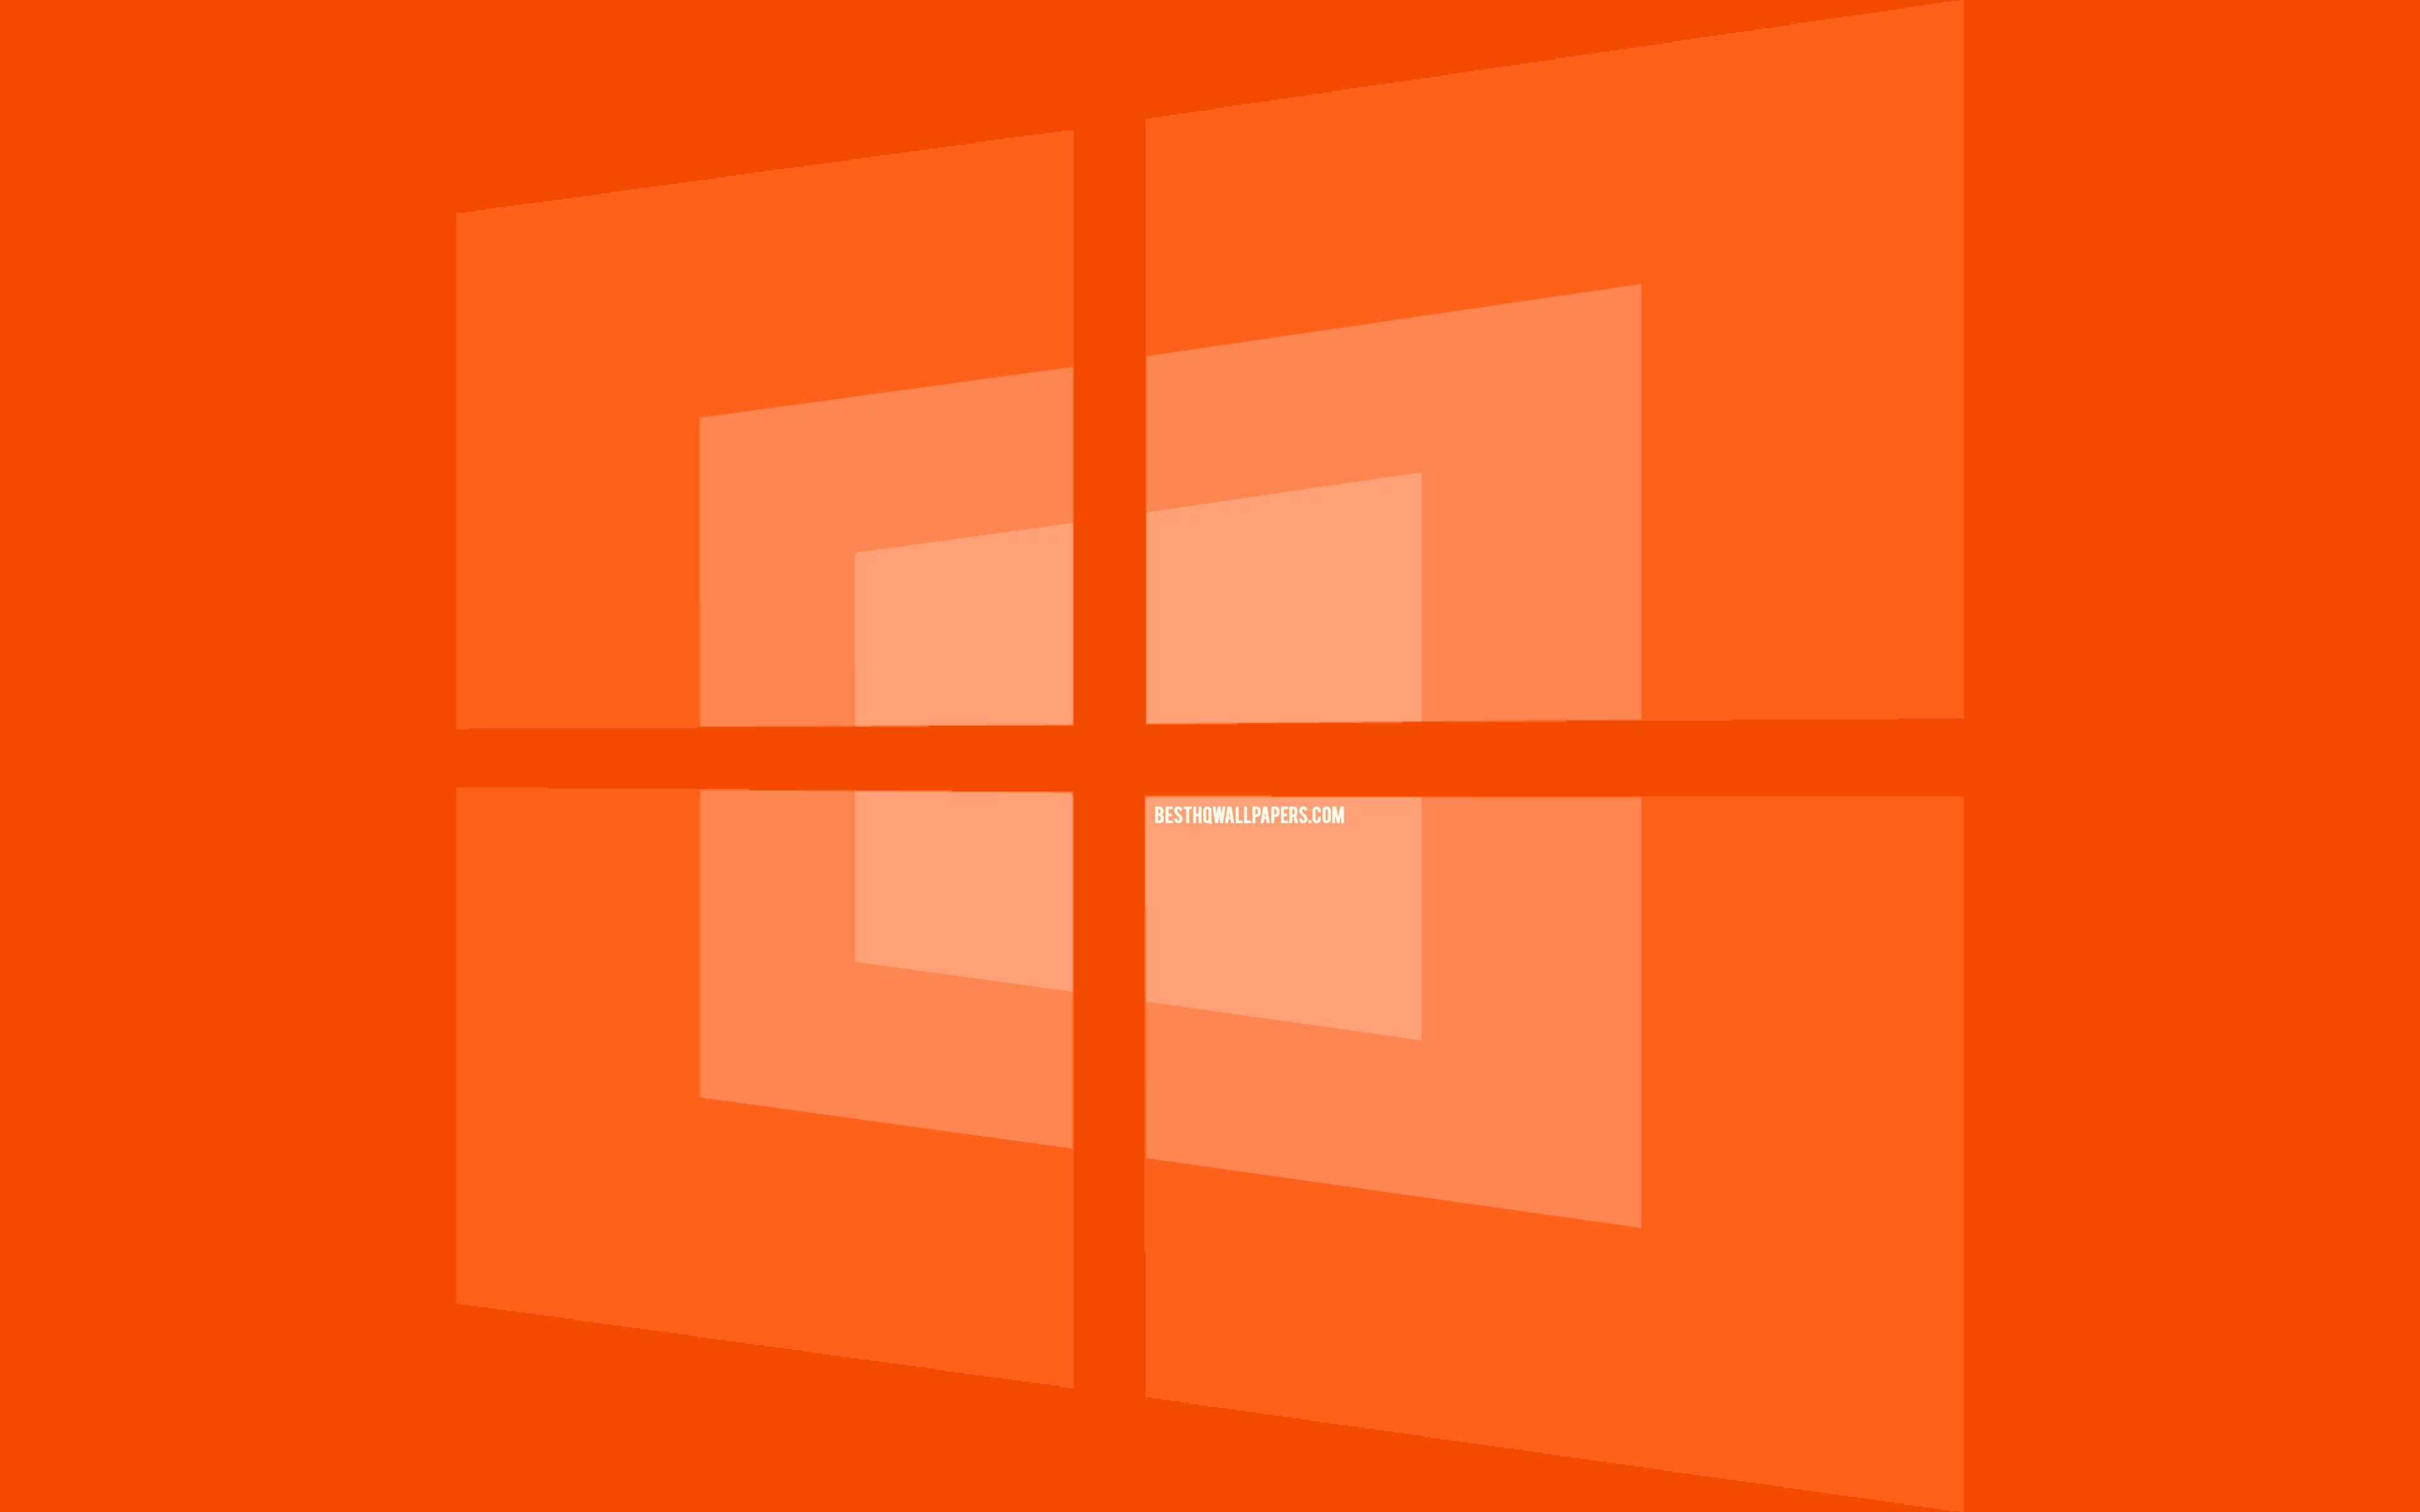 Download wallpaper 4k, Windows 10 orange logo, minimal, OS, orange background, creative, brands, Windows 10 logo, artwork, Windows 10 for desktop with resolution 3840x2400. High Quality HD picture wallpaper